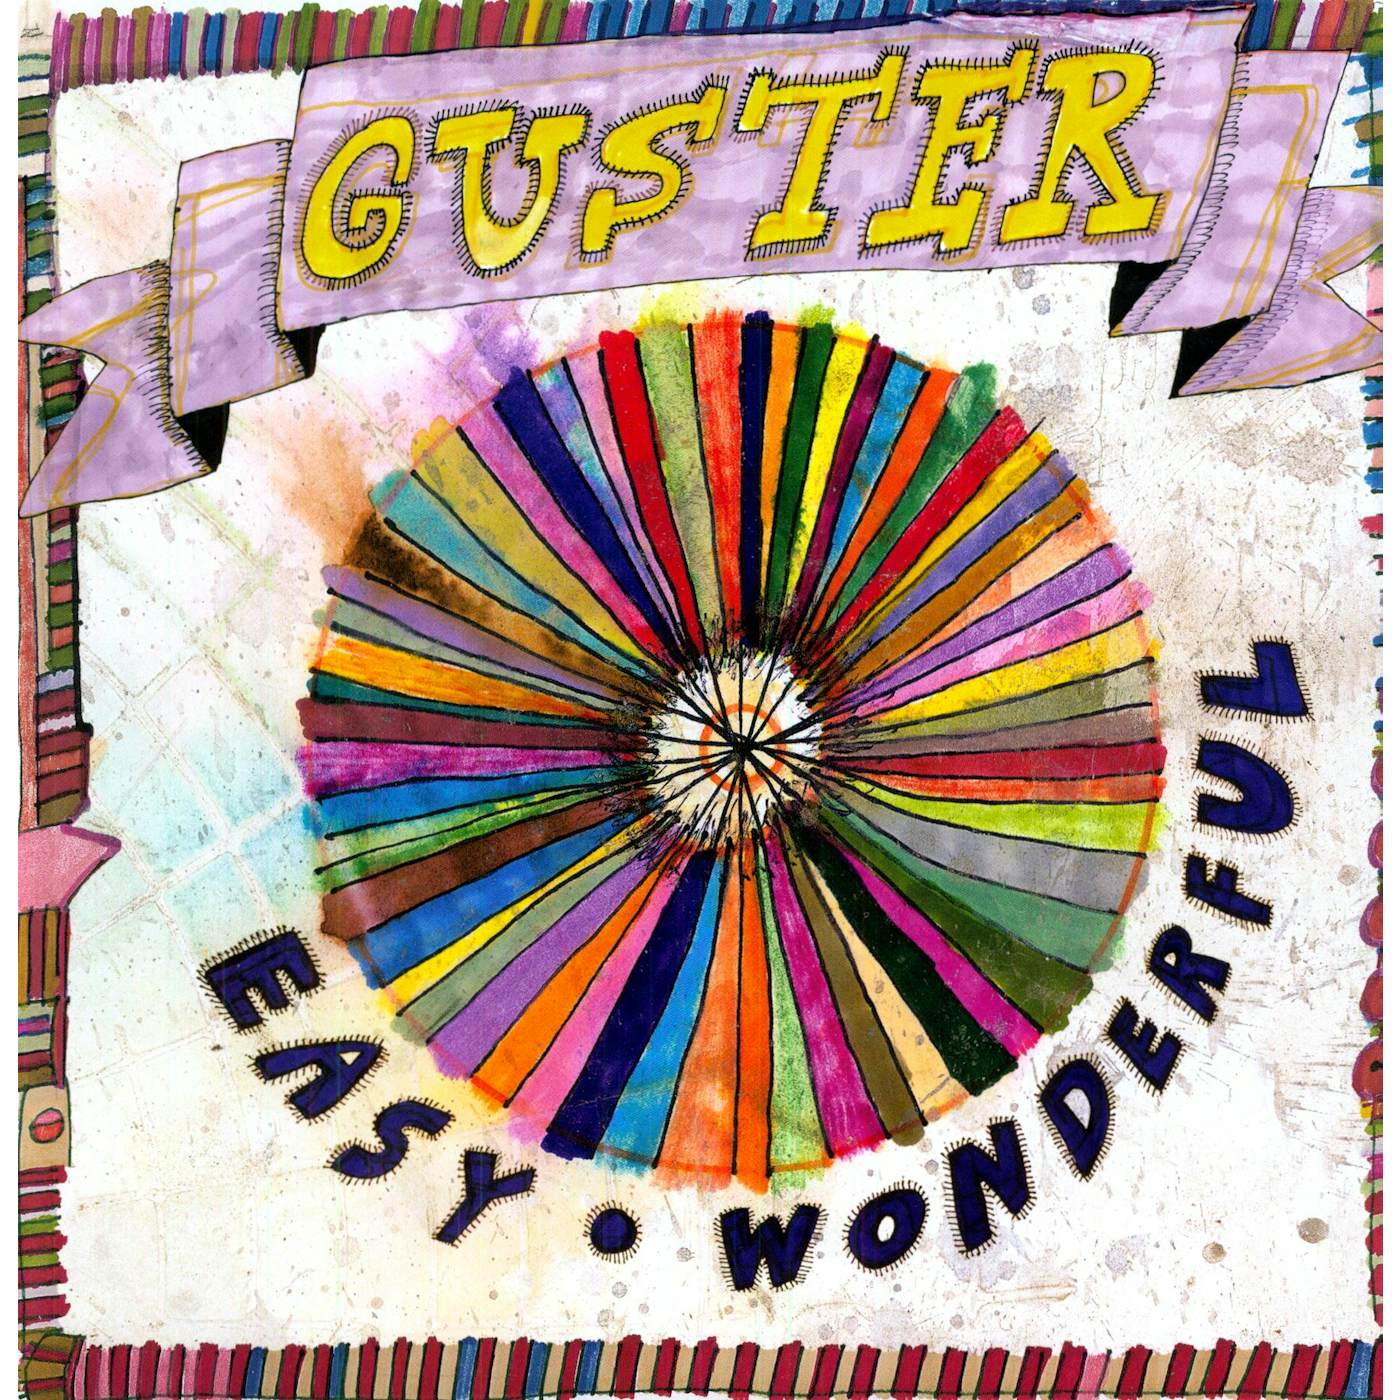 Guster Easy Wonderful Vinyl Record